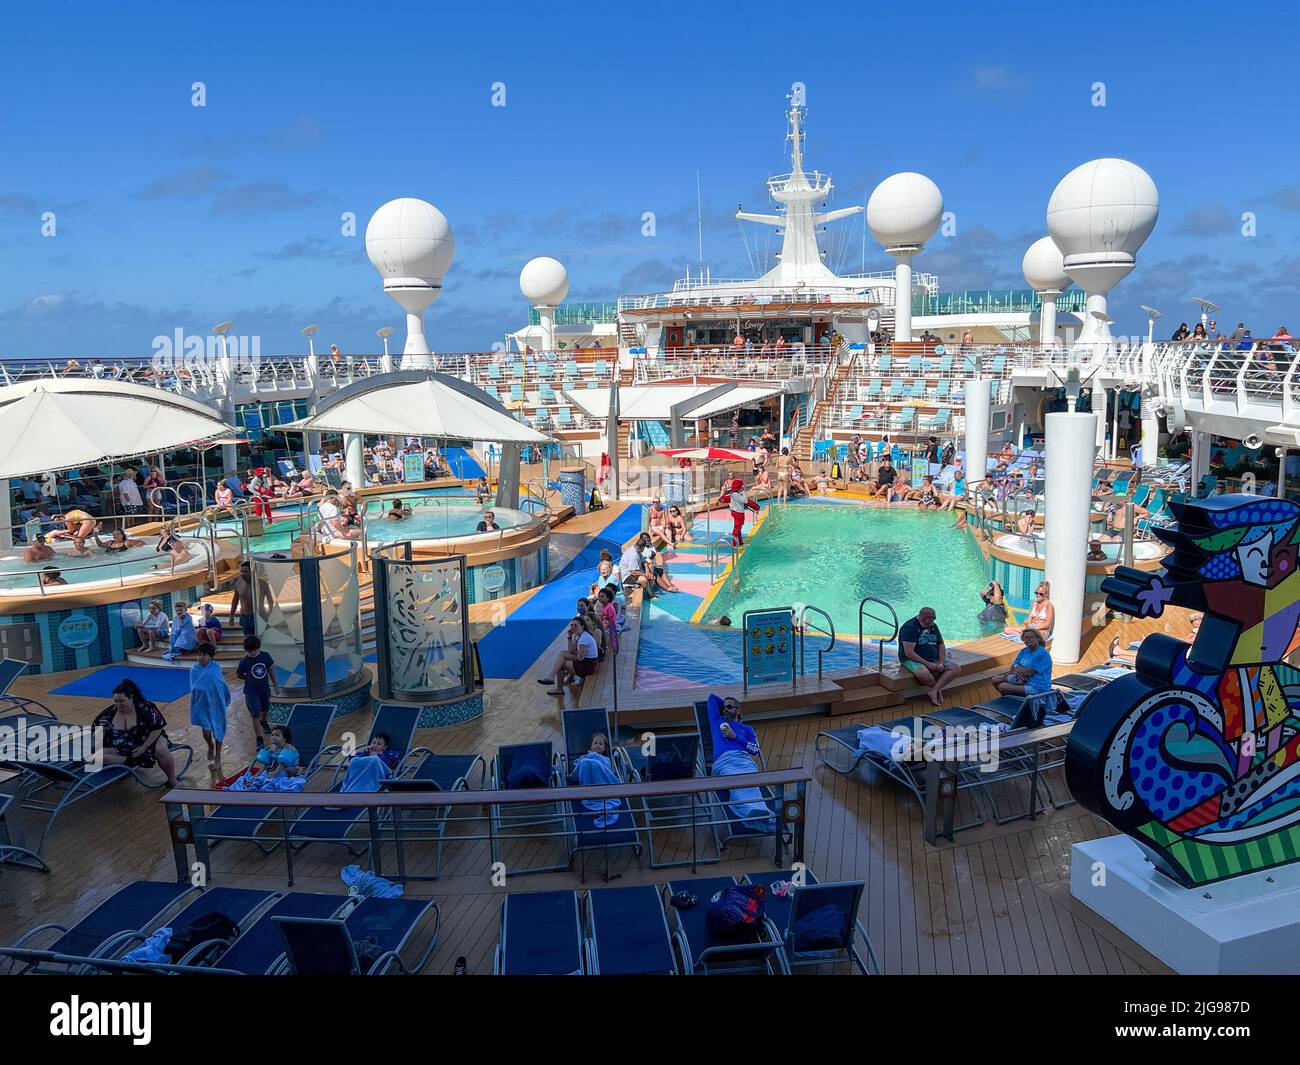 Orlando, FL USA - February 12, 2022:  The Swimming pool area aboard the Royal Caribbean Mariner of the Seas Cruise Ship. Stock Photo